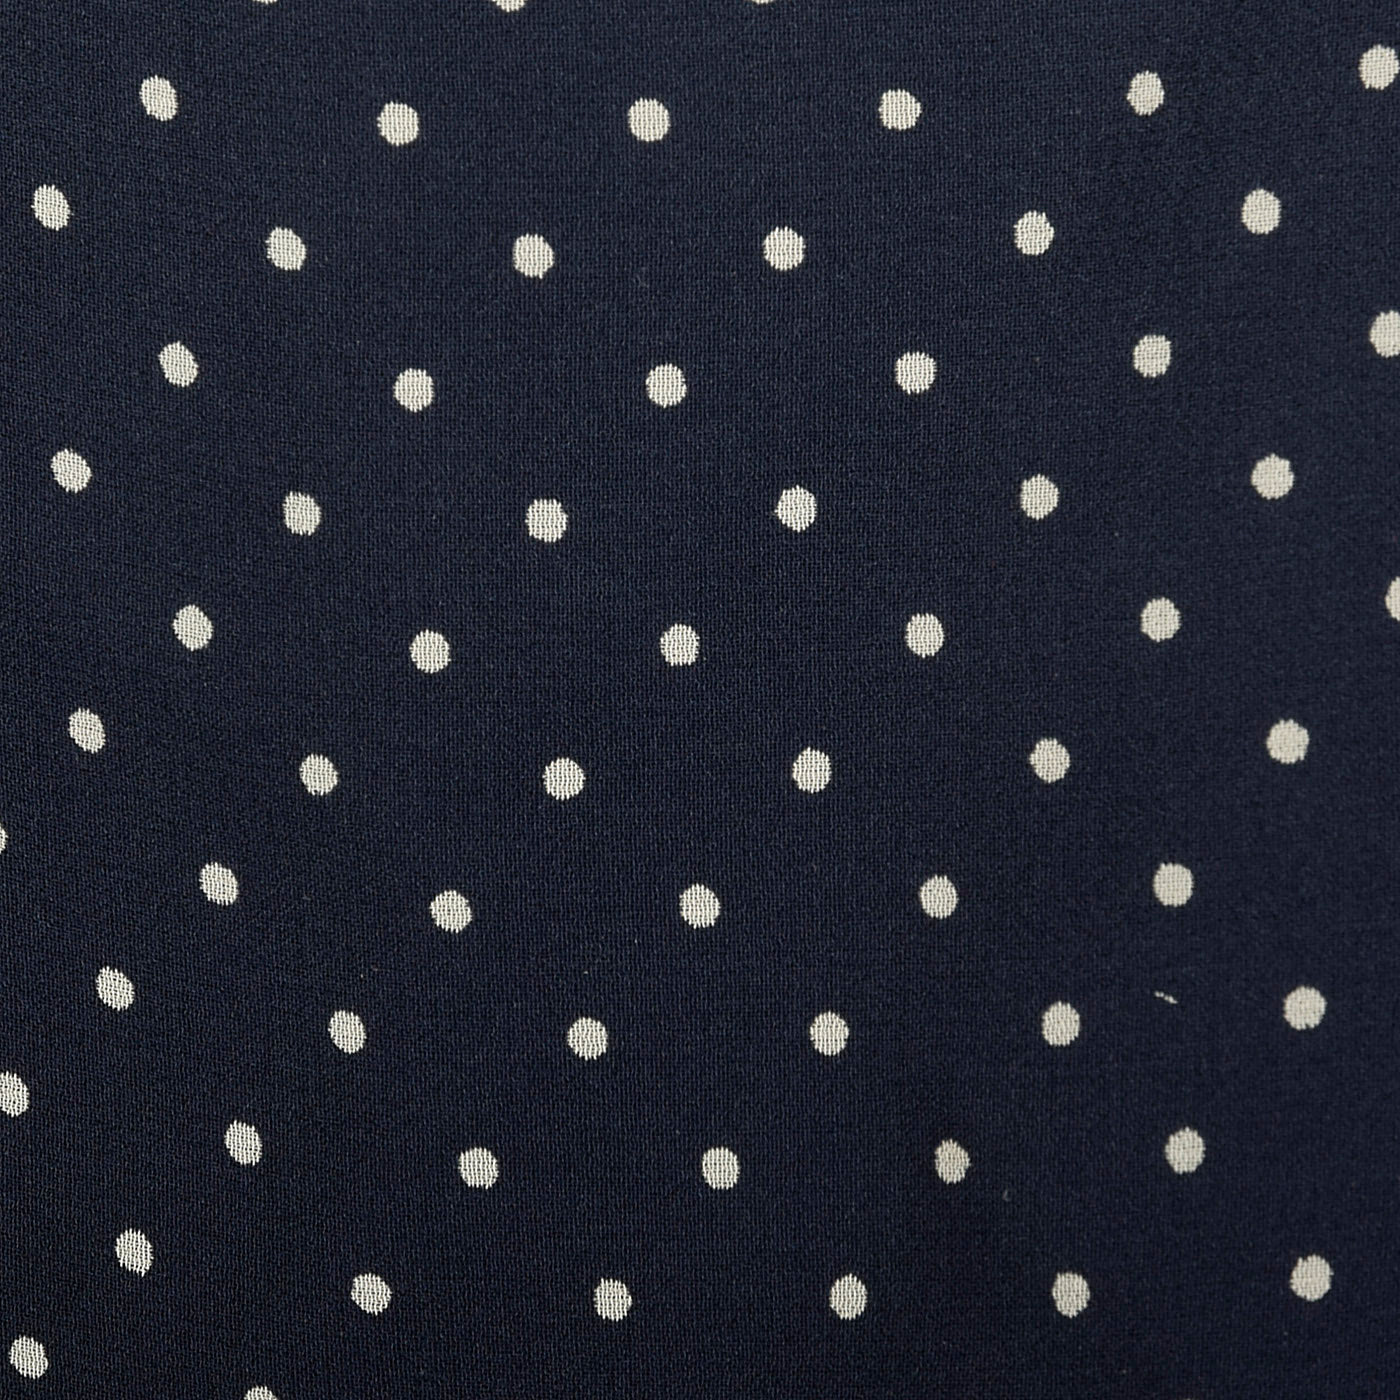 1980s Valentino Night Navy Silk Dress with Swiss Dot Print